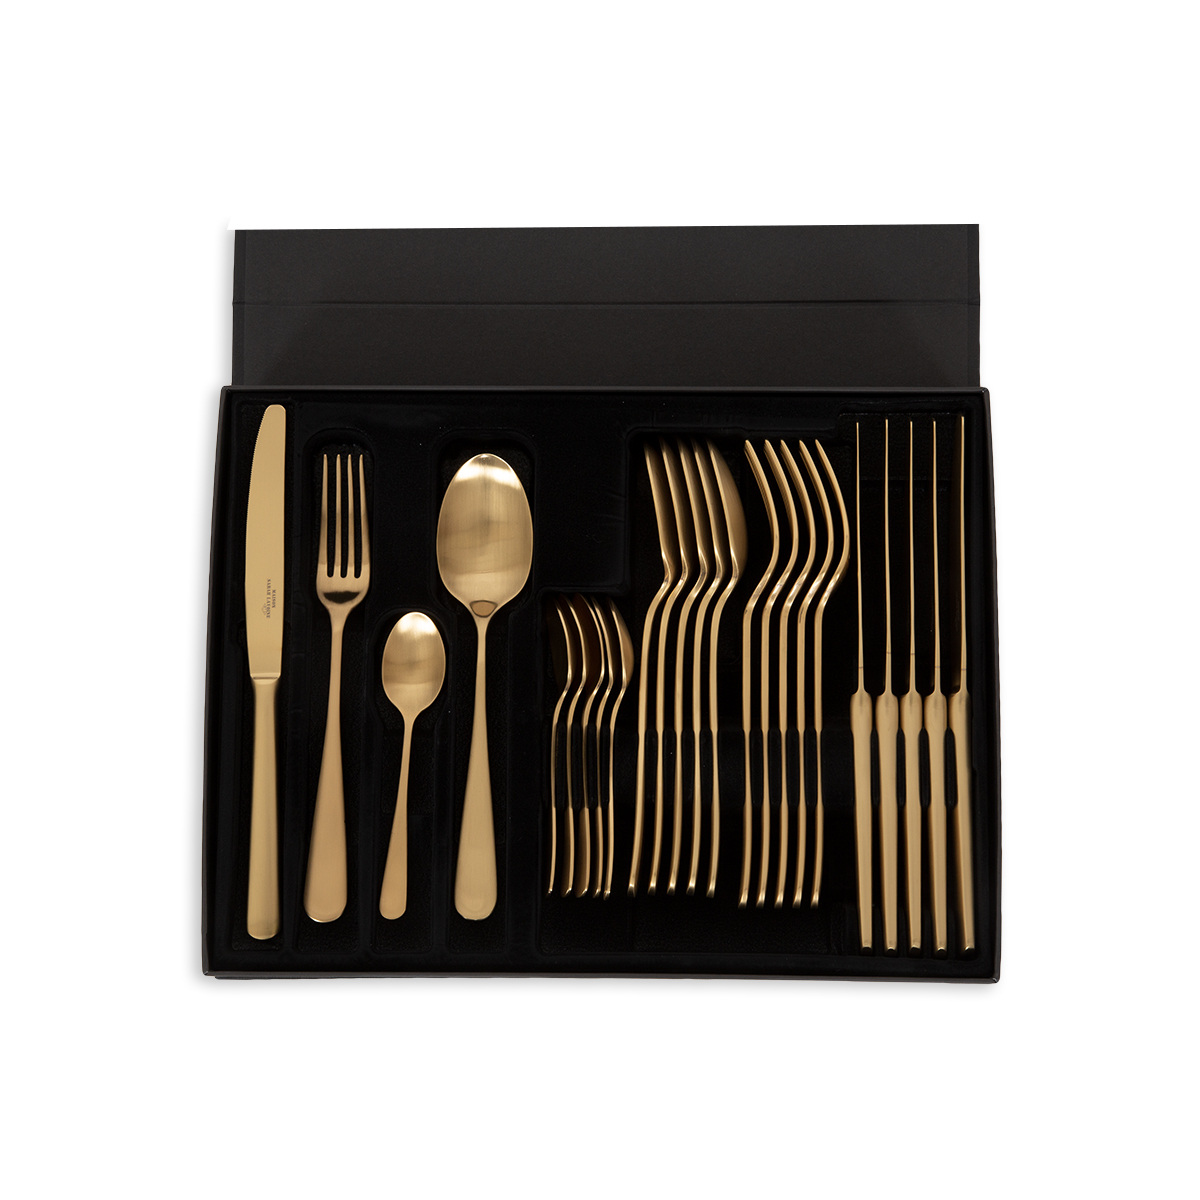 Golden Cutlery Box, Box of 24 pieces - Titanium finish - image 1